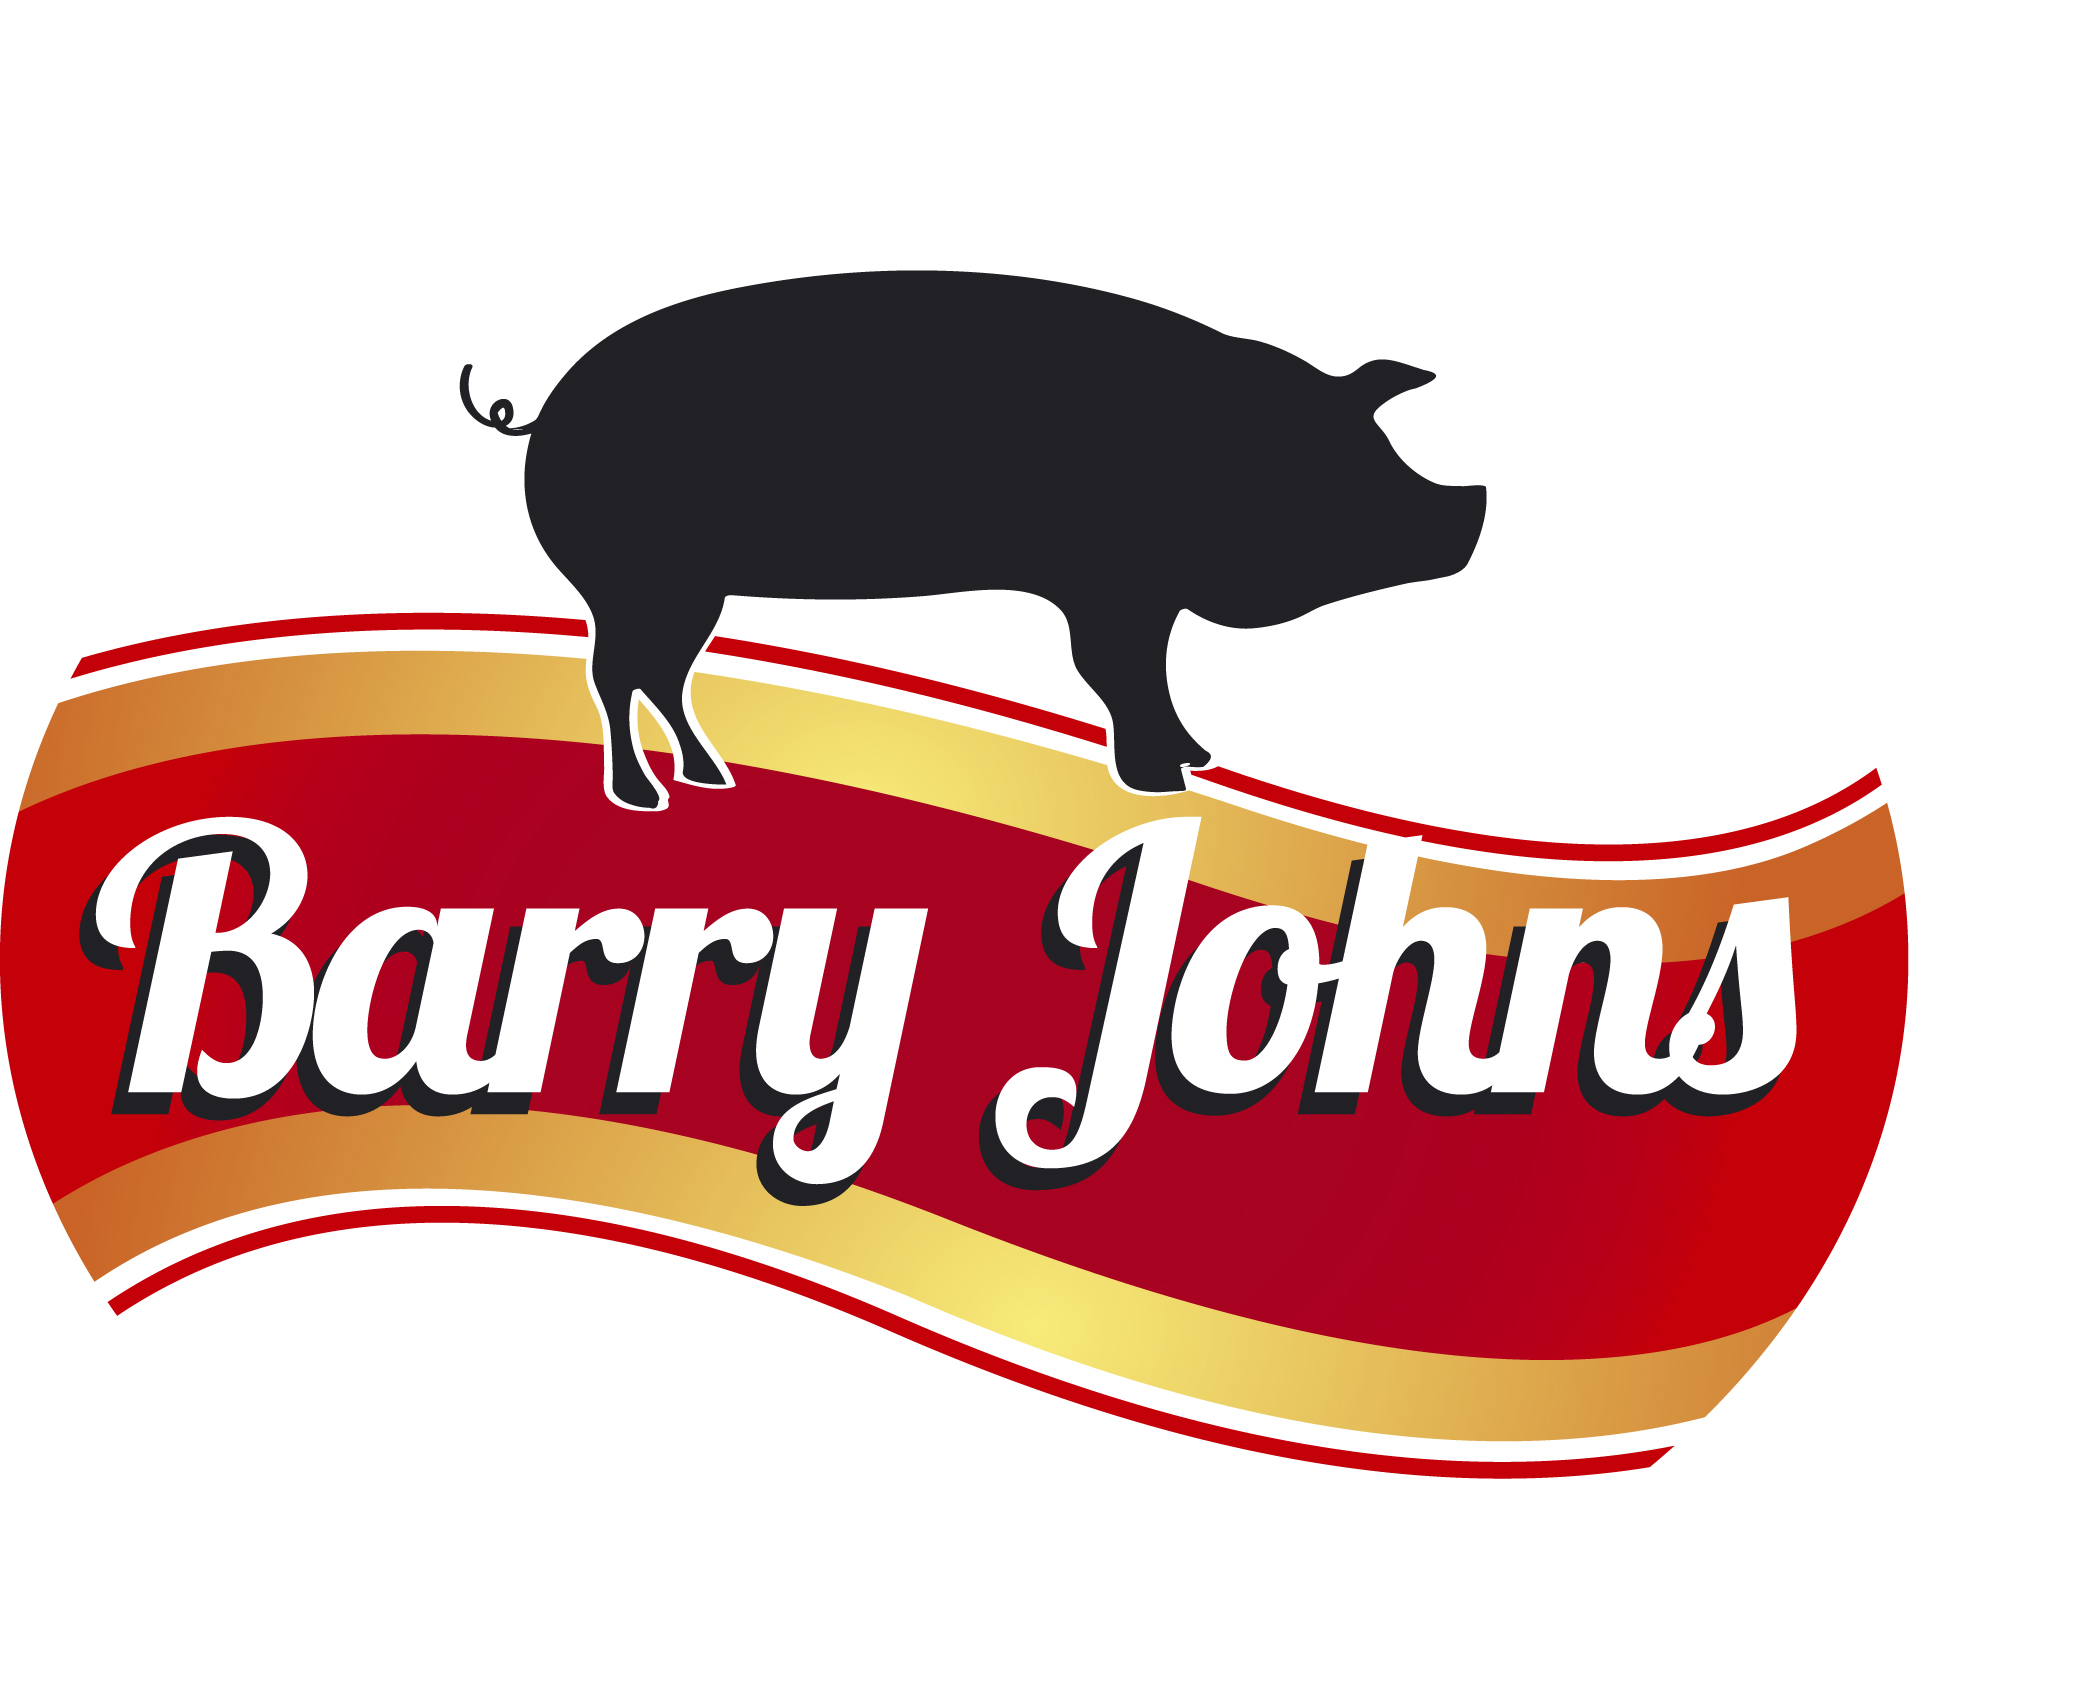 Image of Barry John Sausages logotype